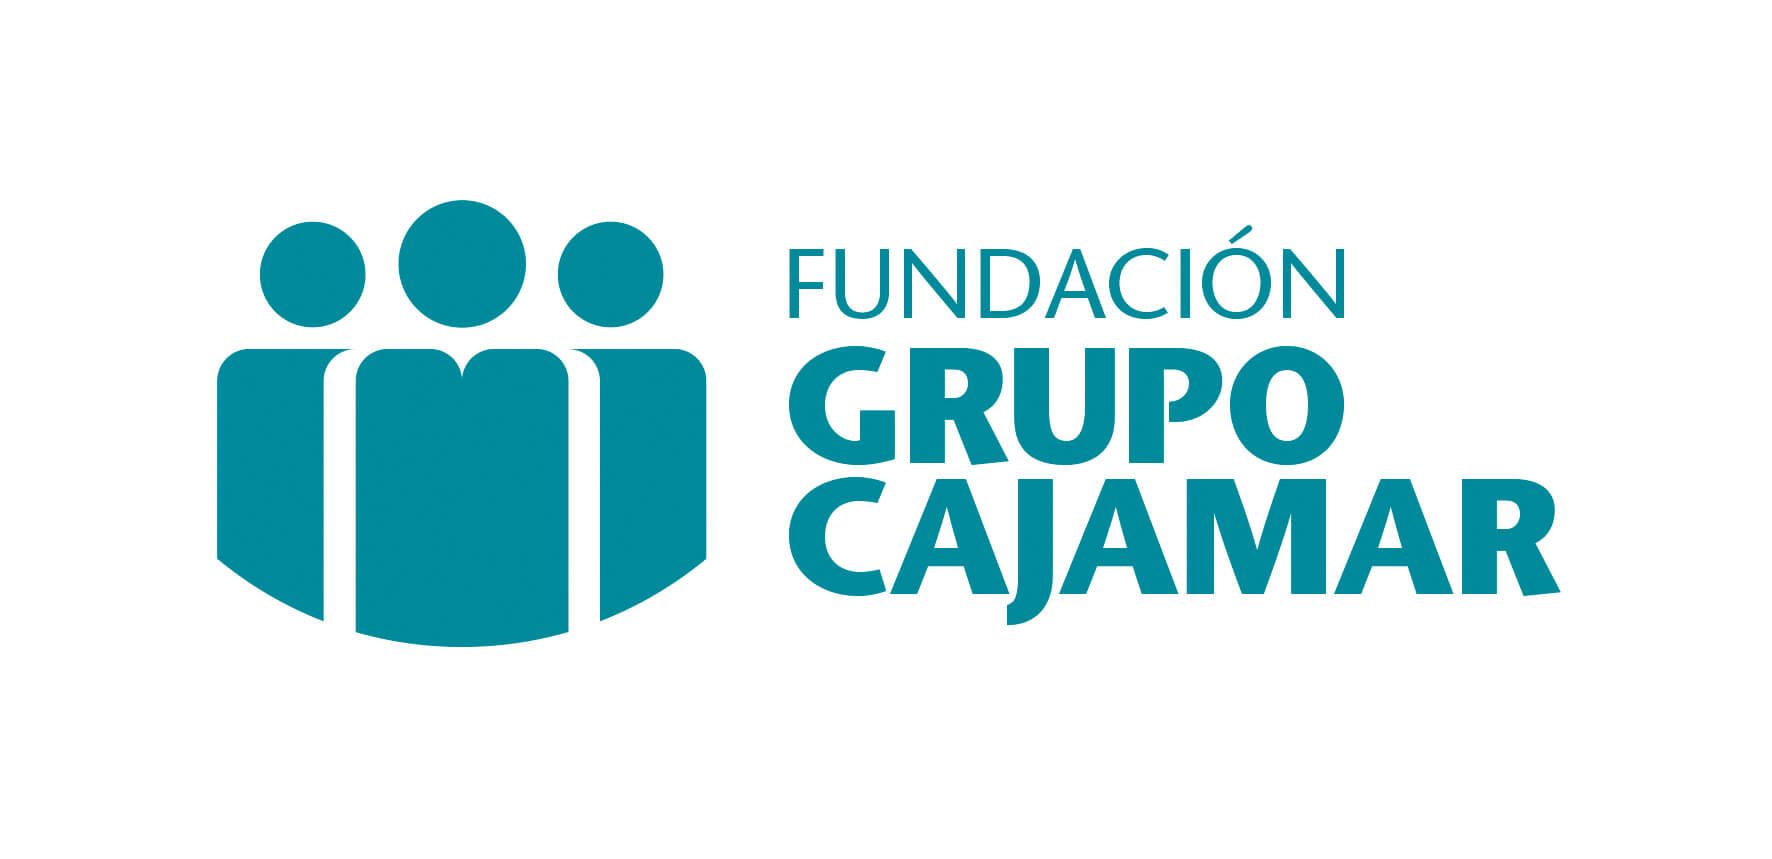 Fundación GRUPO CAJAMAR